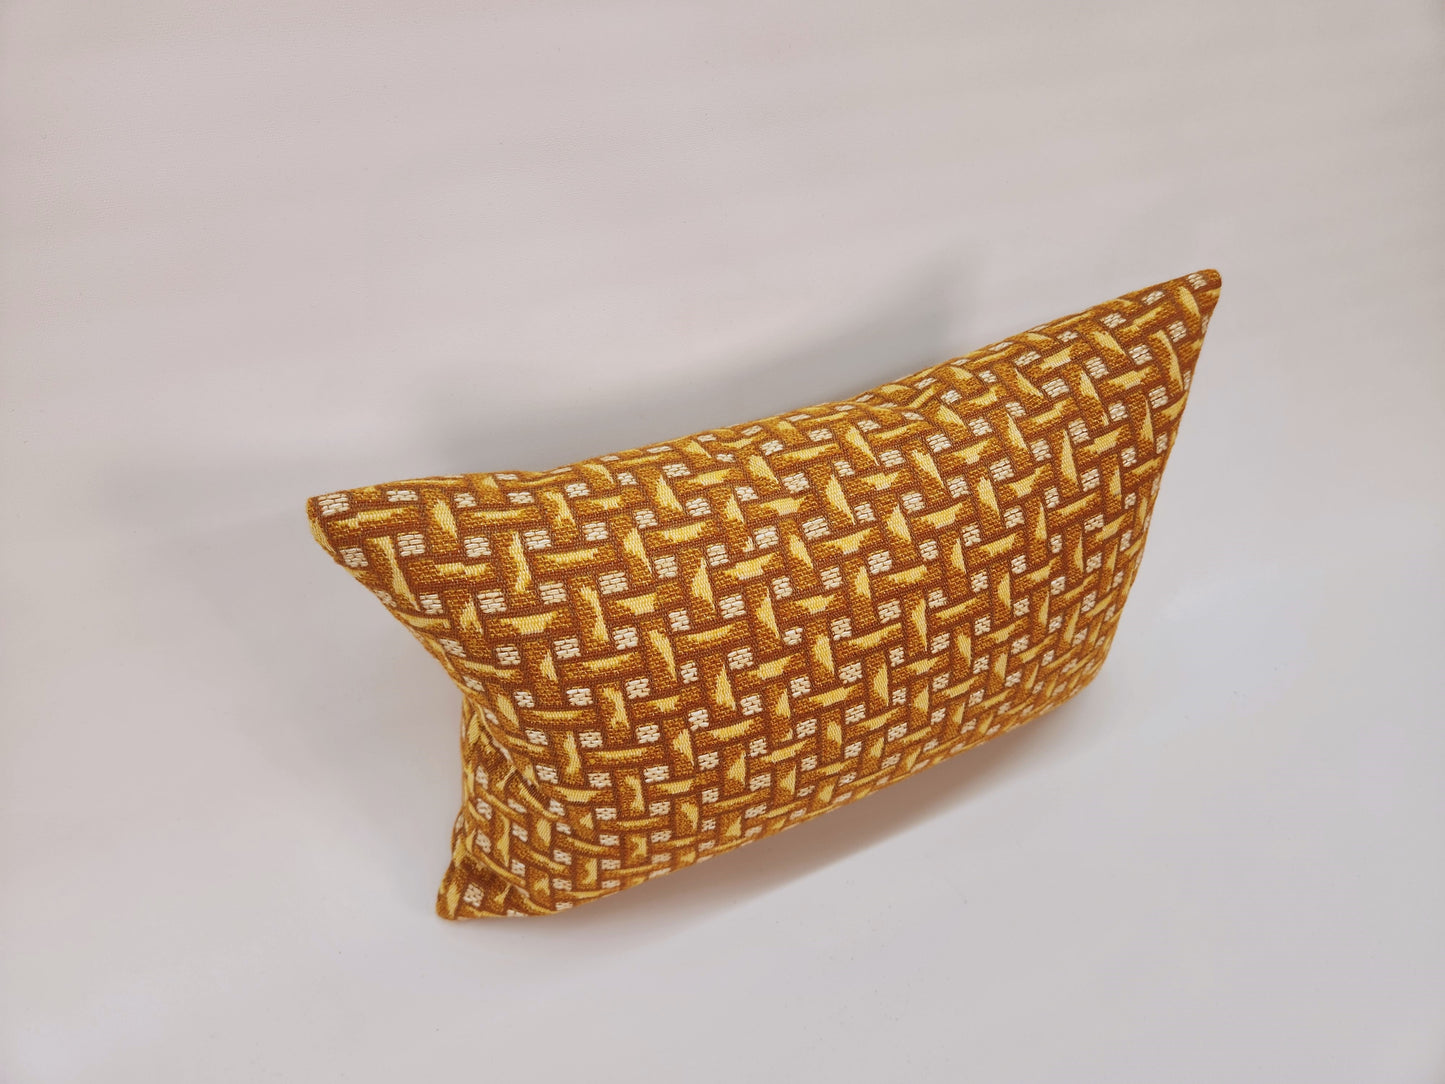 Vintage Fabric Chunky Orange, Yellow and Natural Geometric Woven 1970s Lumbar Pillow 12"x18"